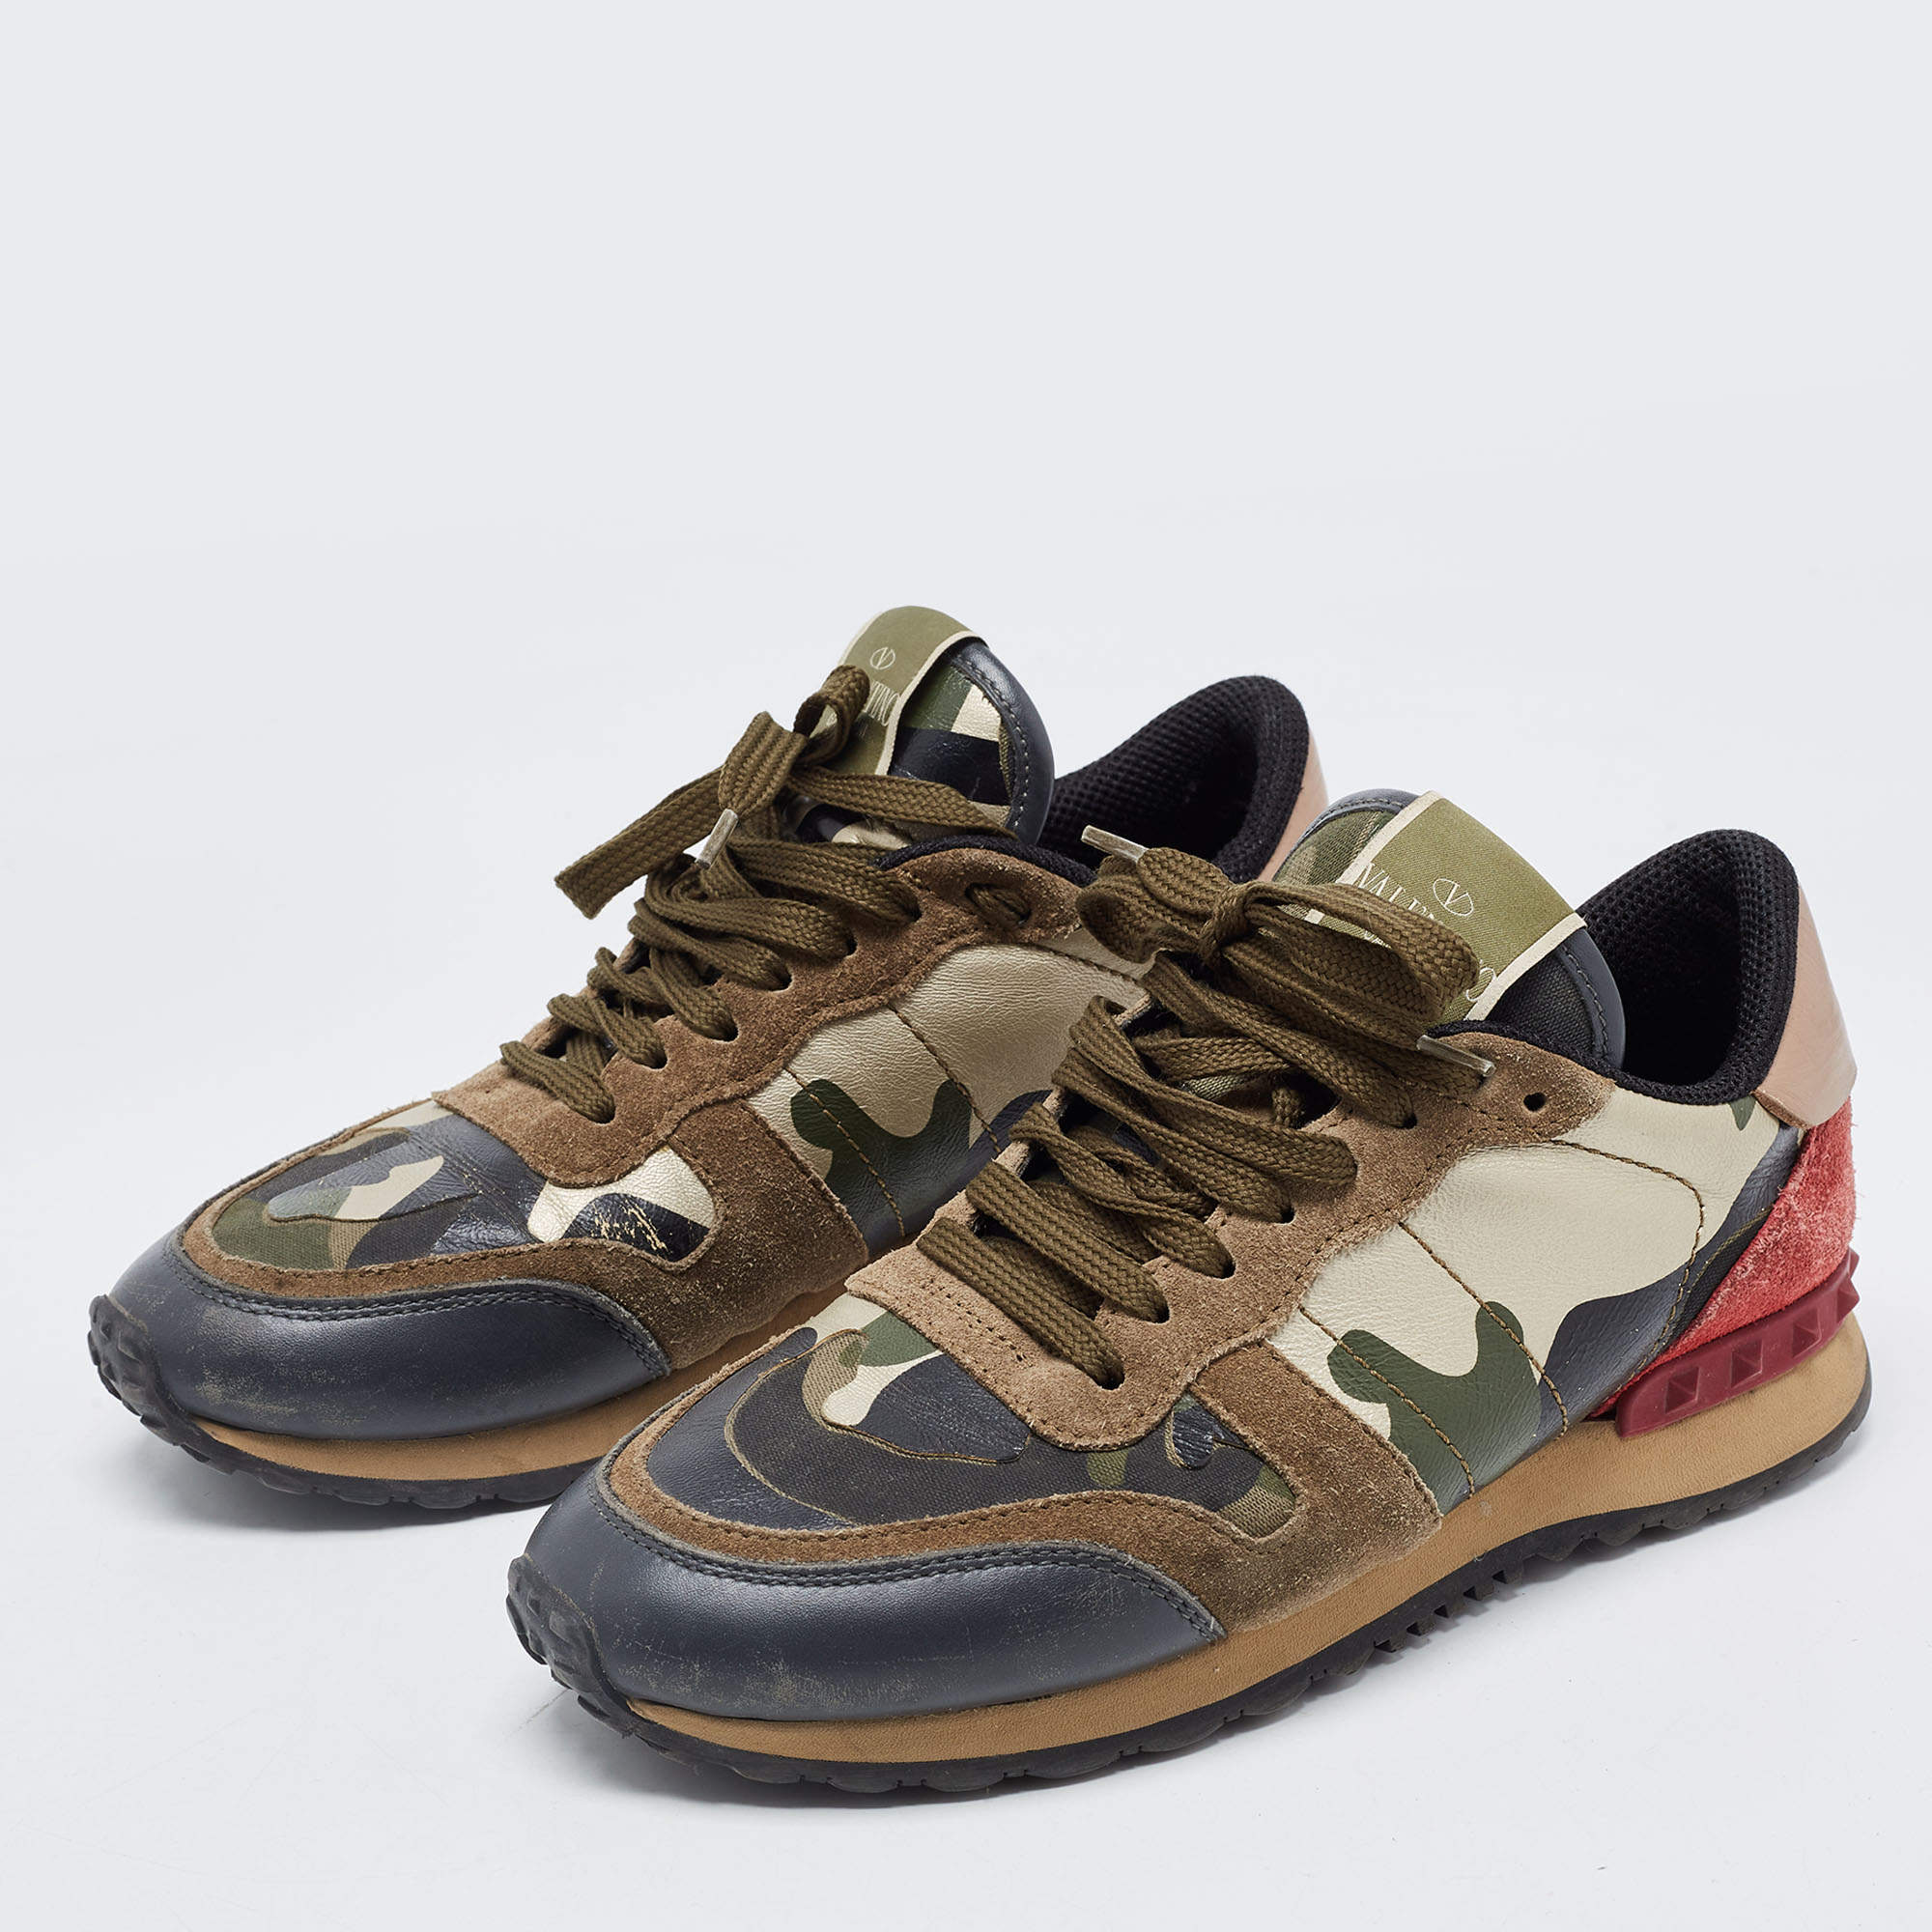 Own a Desert Camouflage OrIginal ONEMIX Running Shoes for Men Women